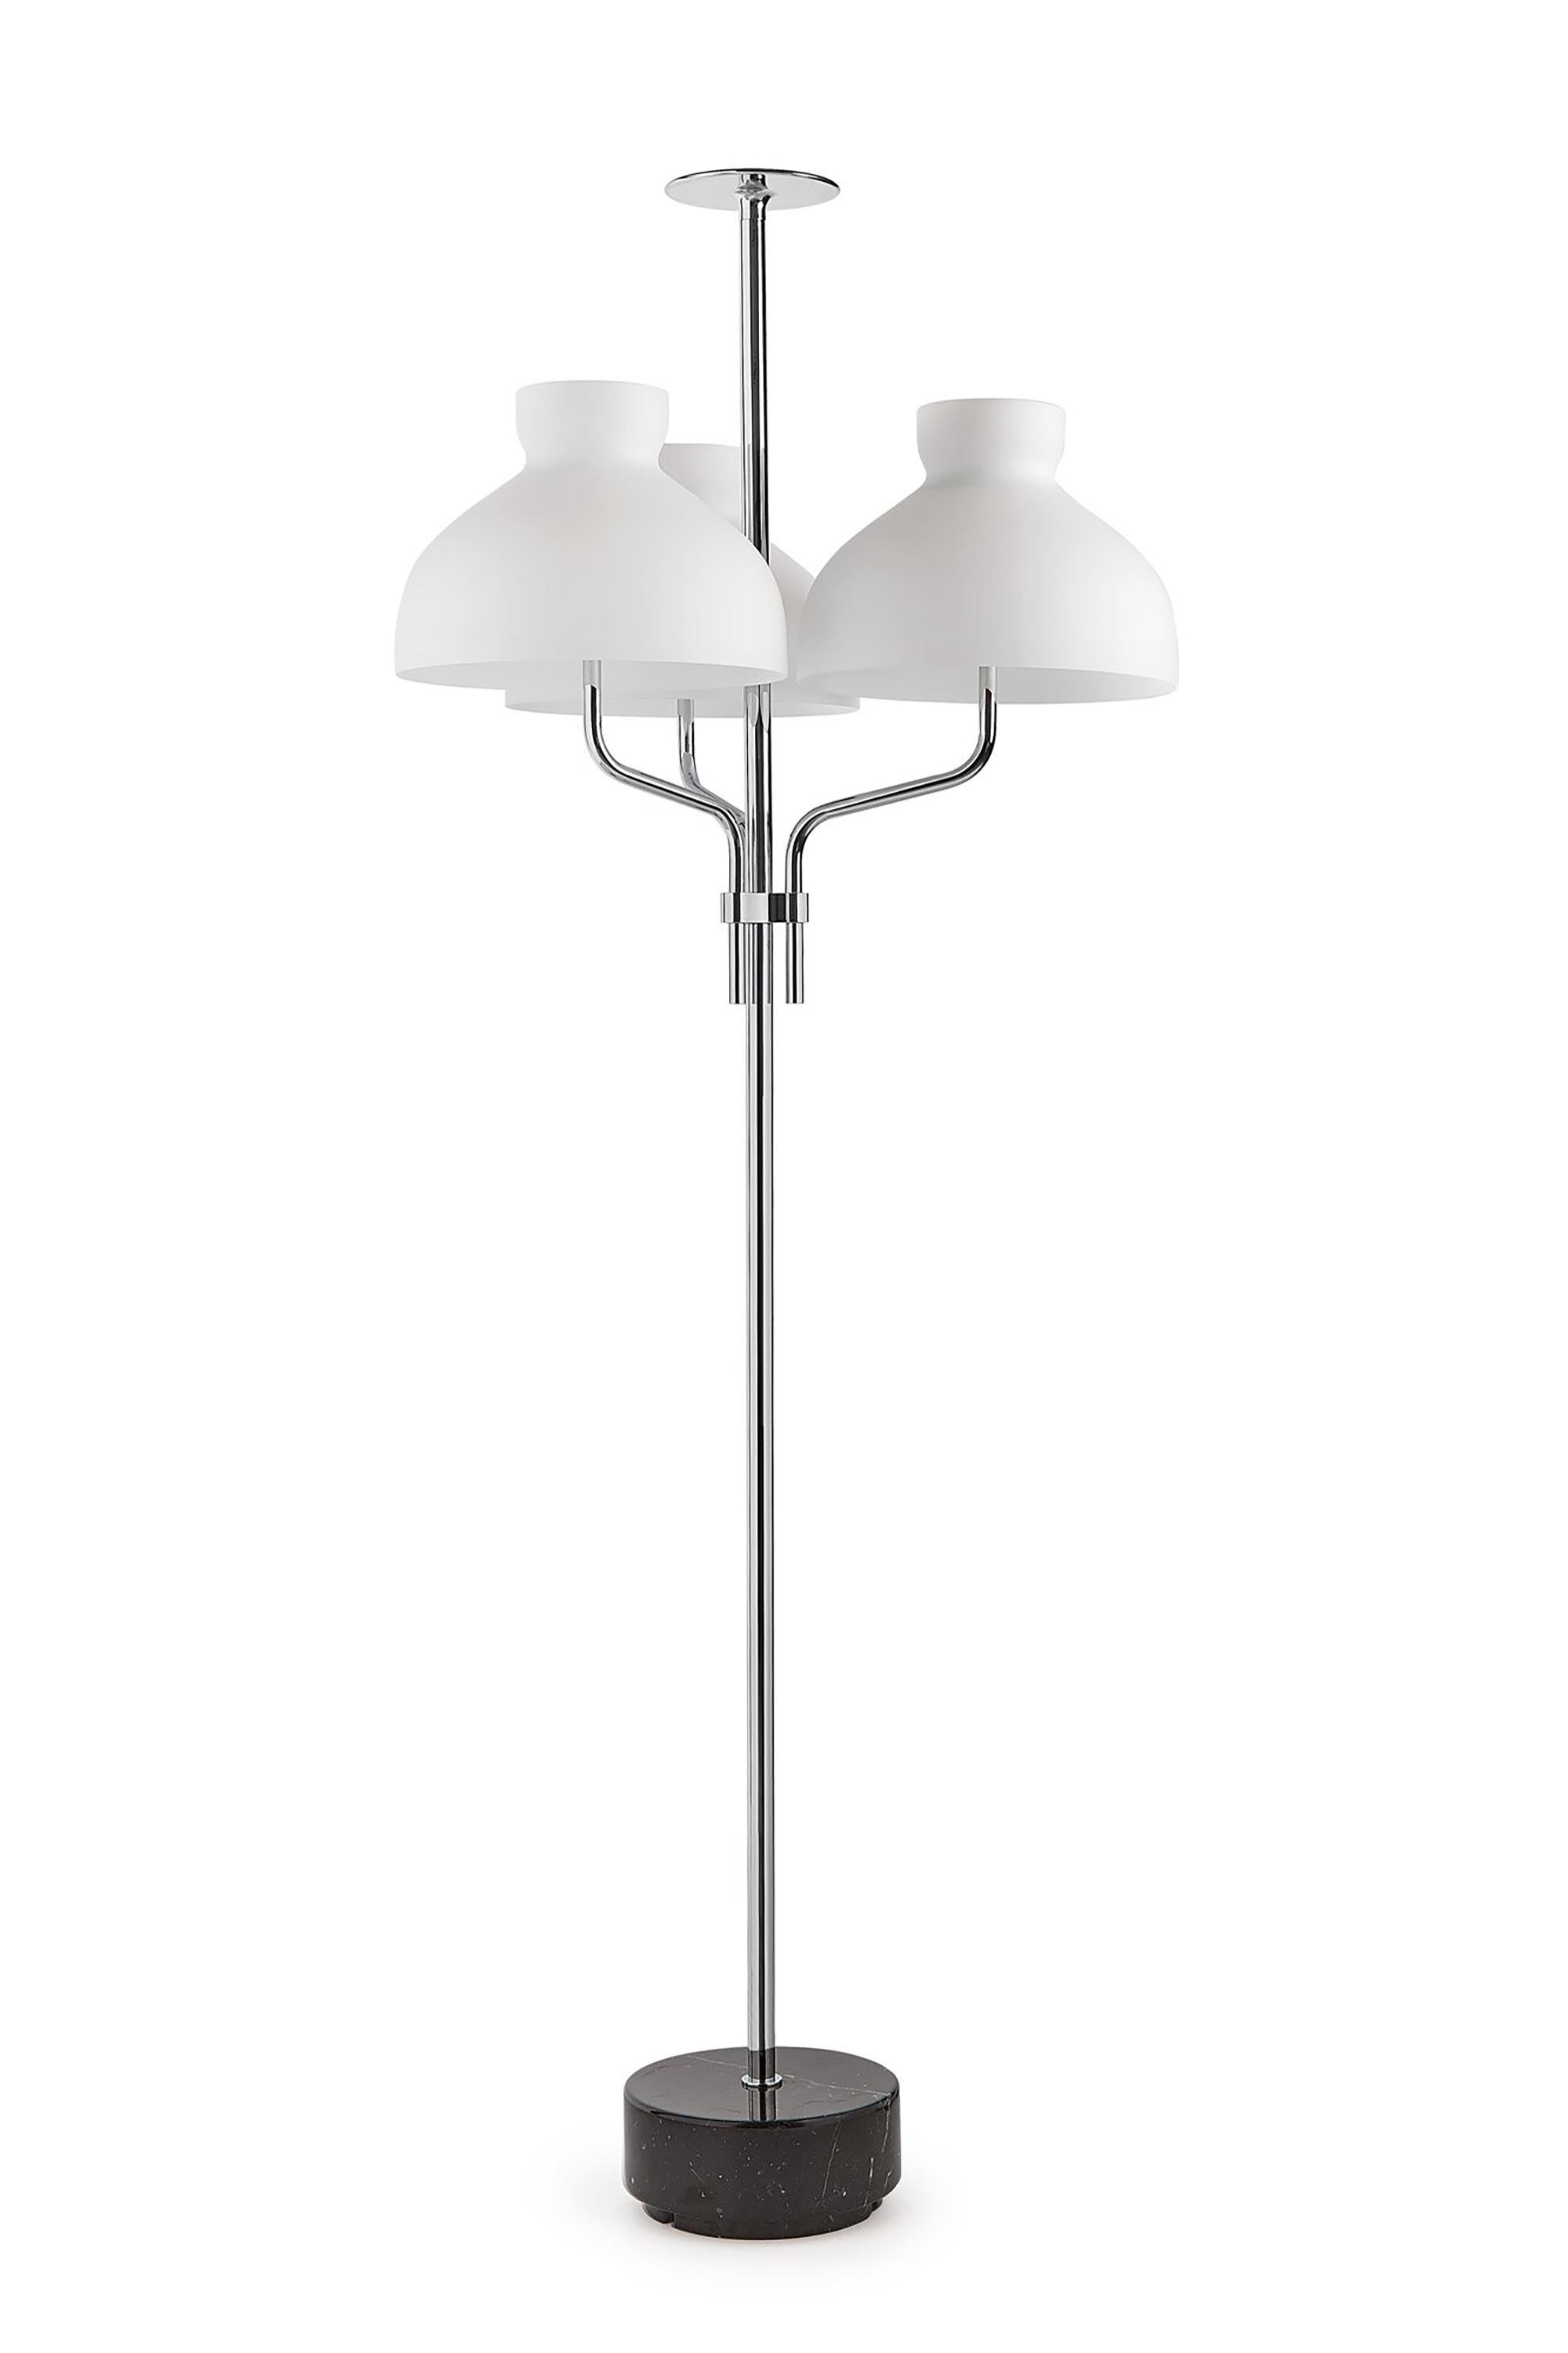 Opaline Glass Ignazio Gardella 'Arenzano Tre Fiamme' Floor Lamp in White Marble and Chrome For Sale